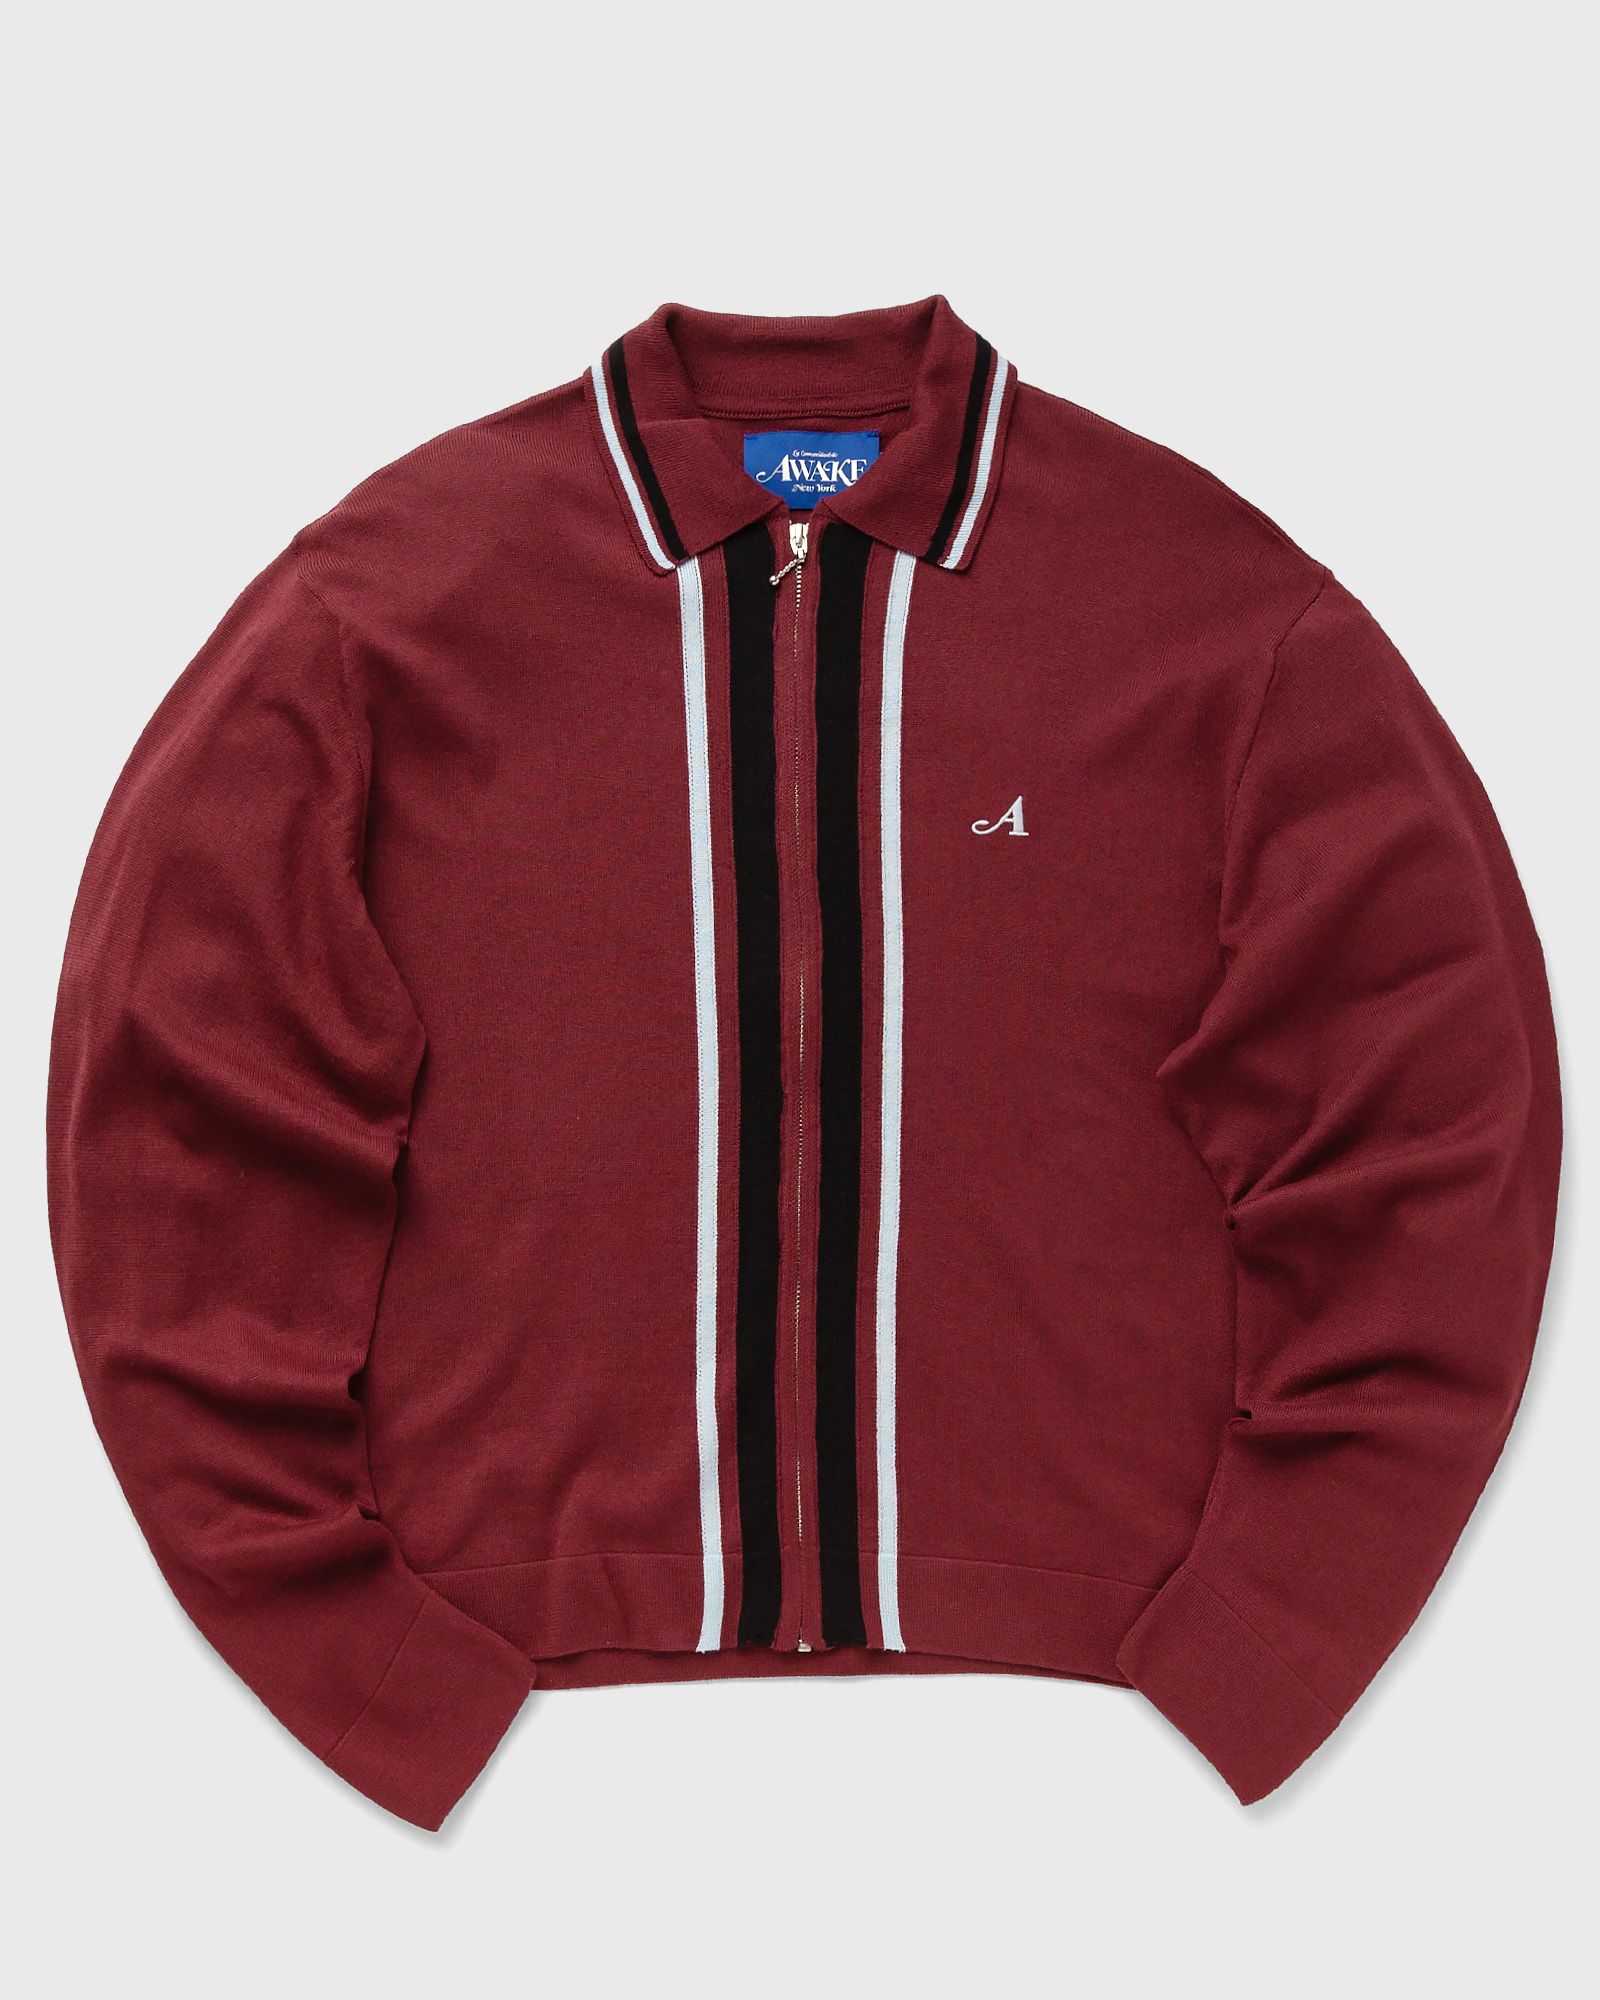 Awake - full zip sweater men sweatshirts|zippers red in größe:xl